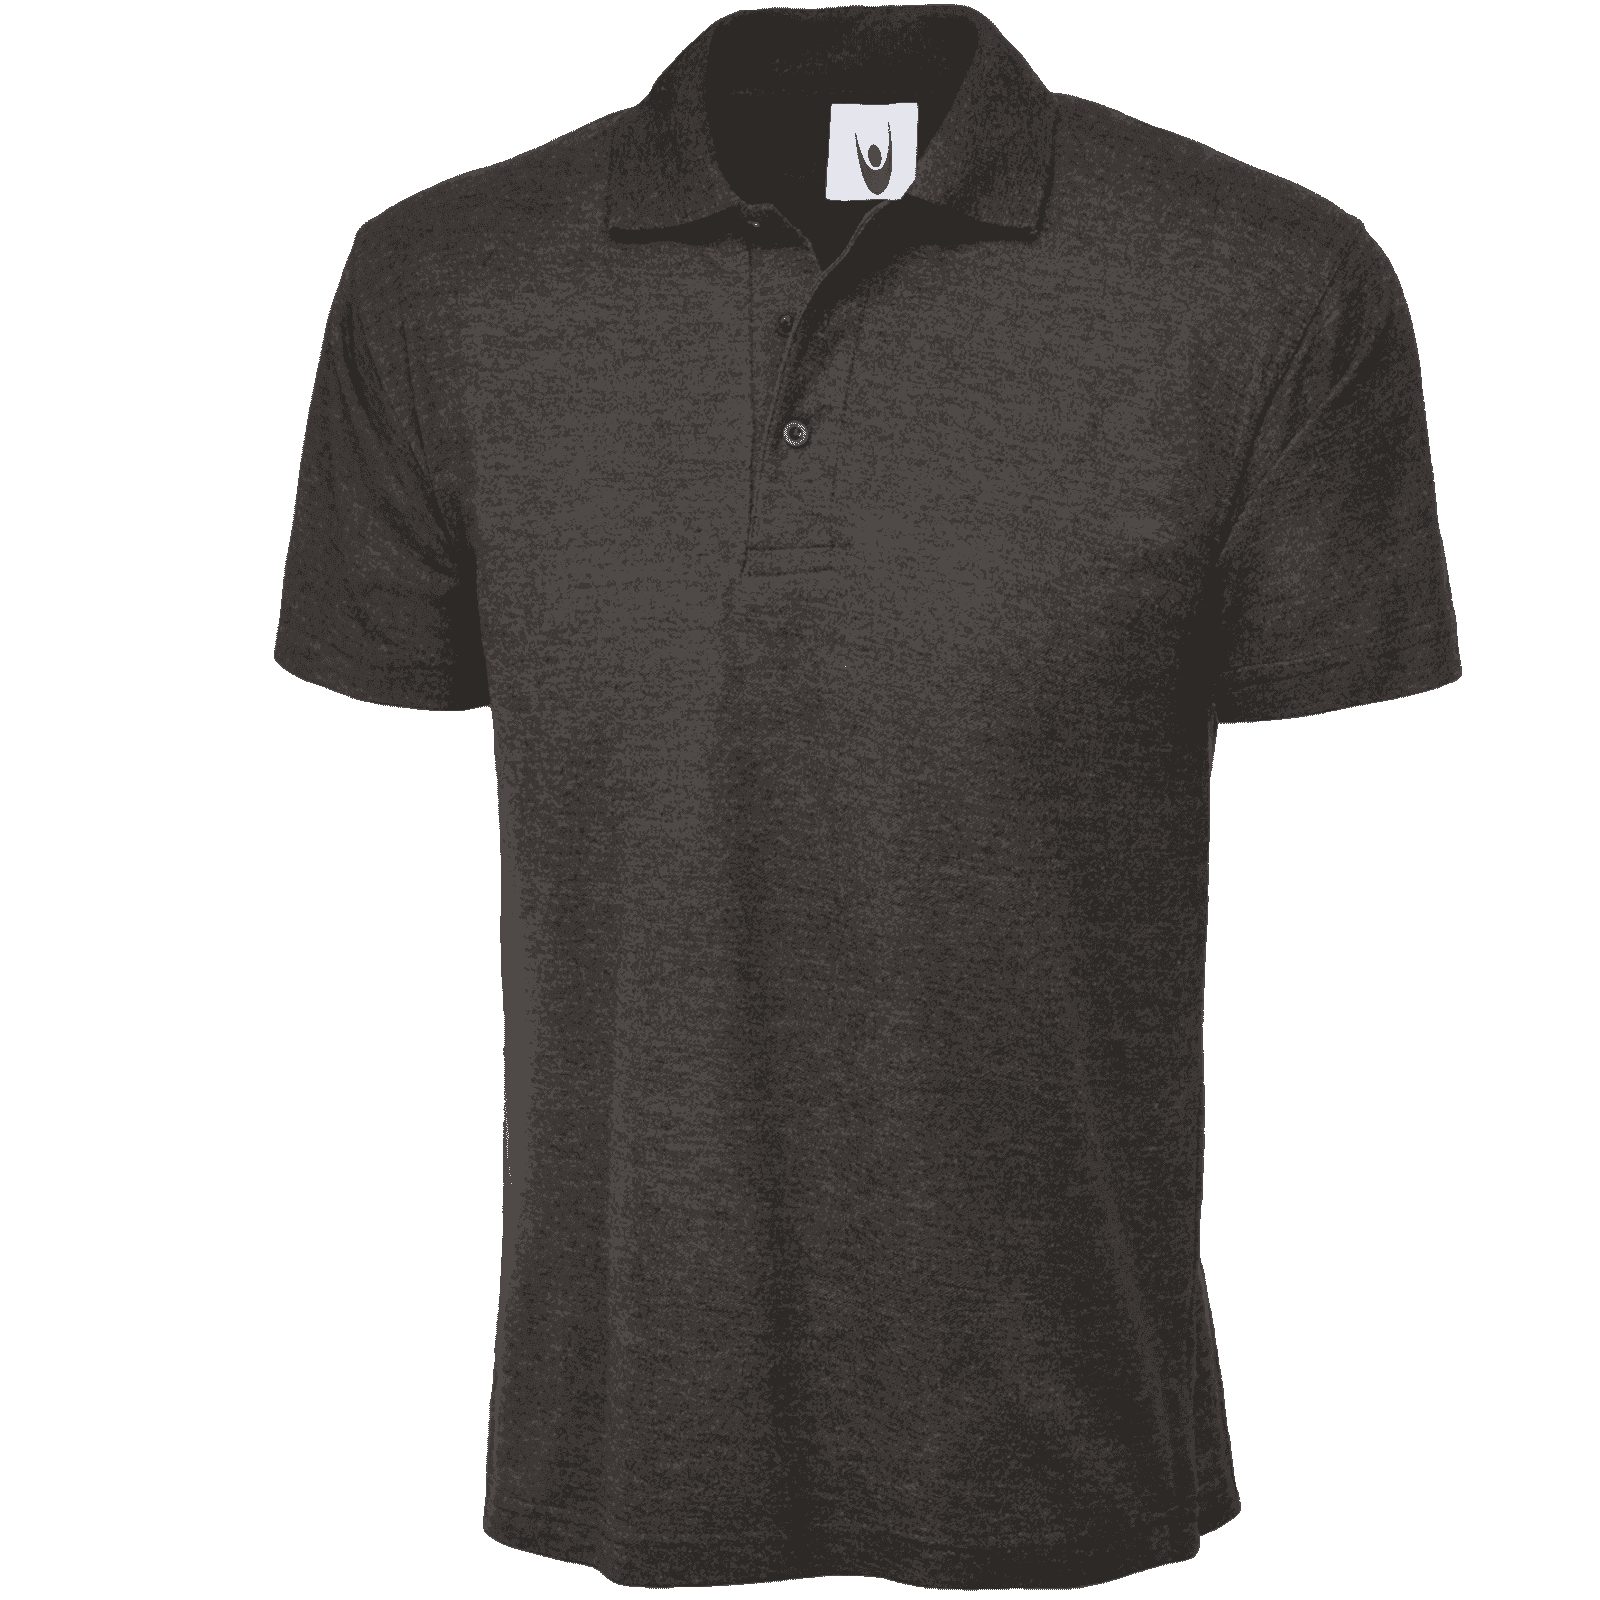 Classic Work Polo Shirt Uneek Clothing UC101 Charcoal